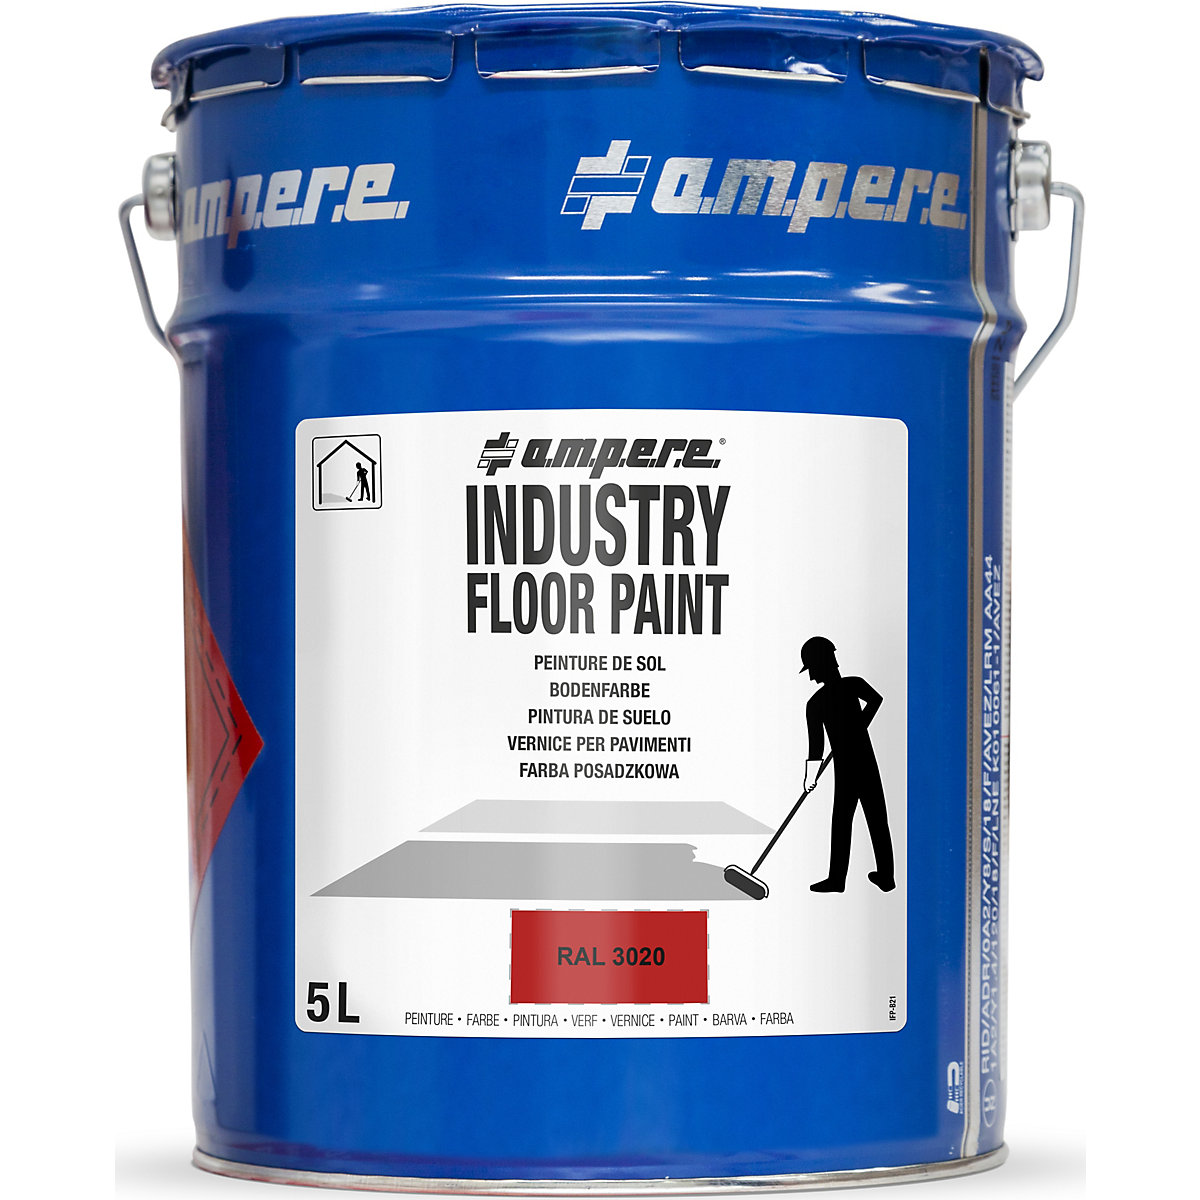 Peinture de marquage des sols Industry Floor Paint® – Ampere